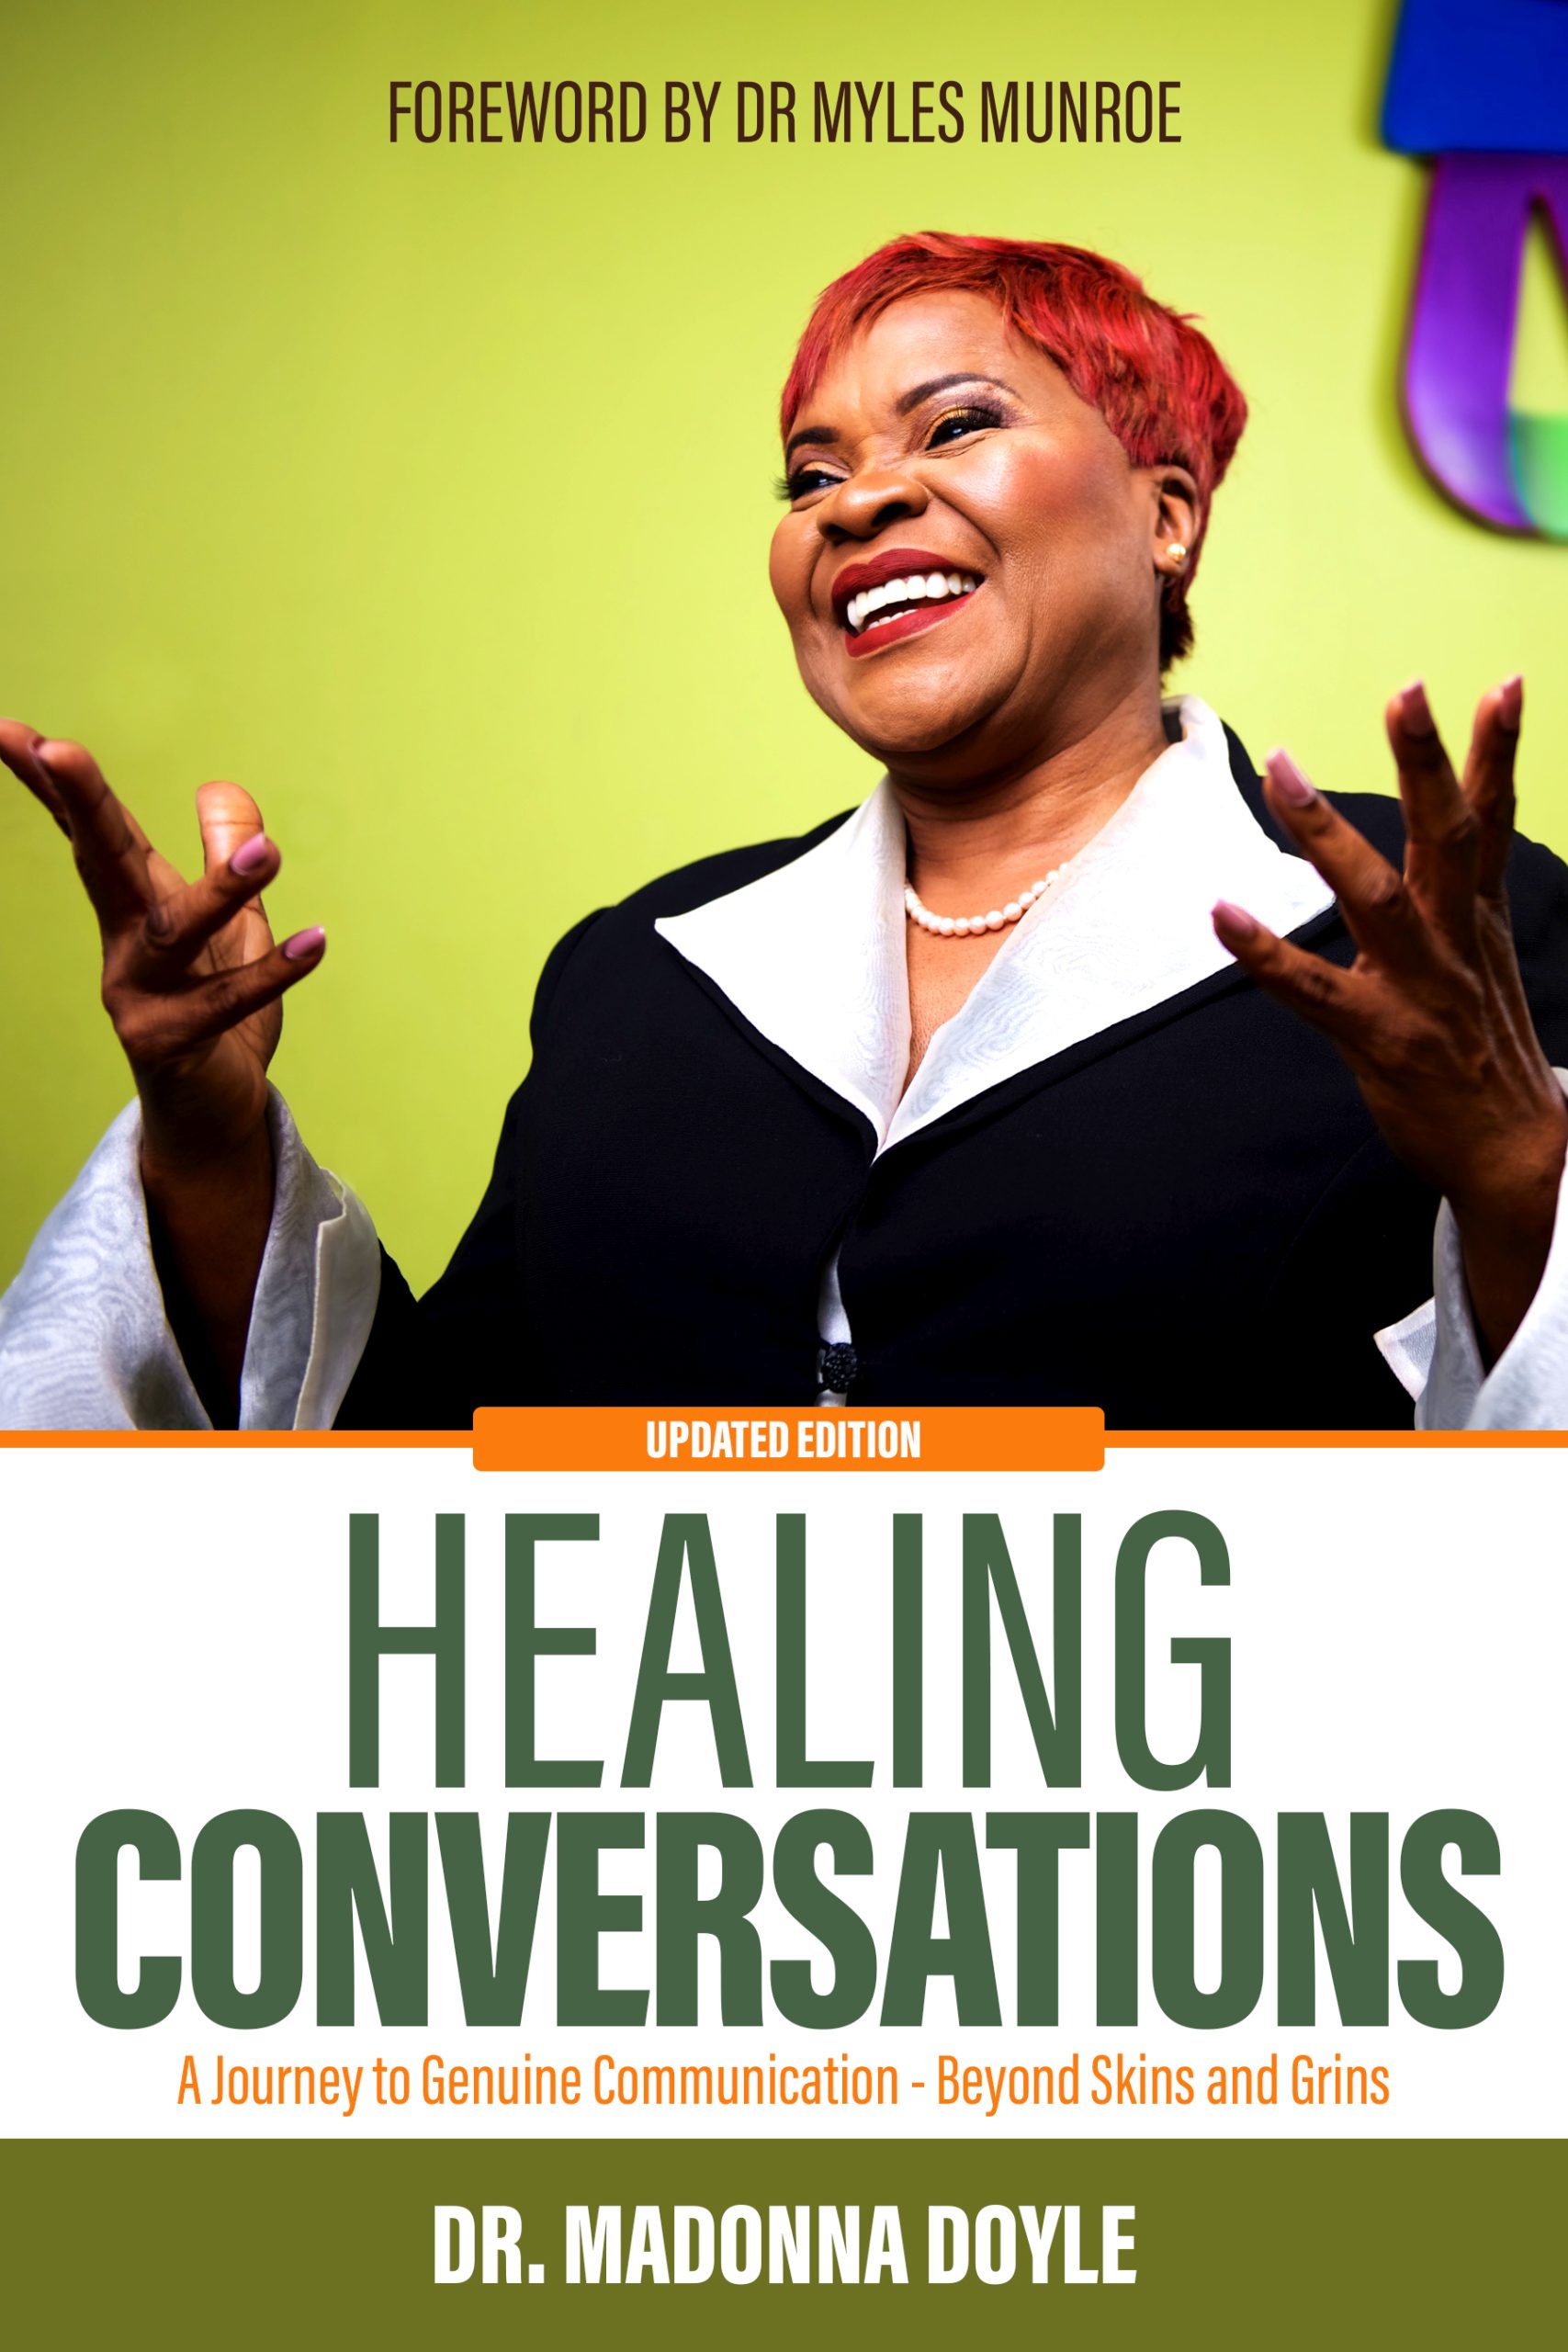 healing conversations front cover final fl